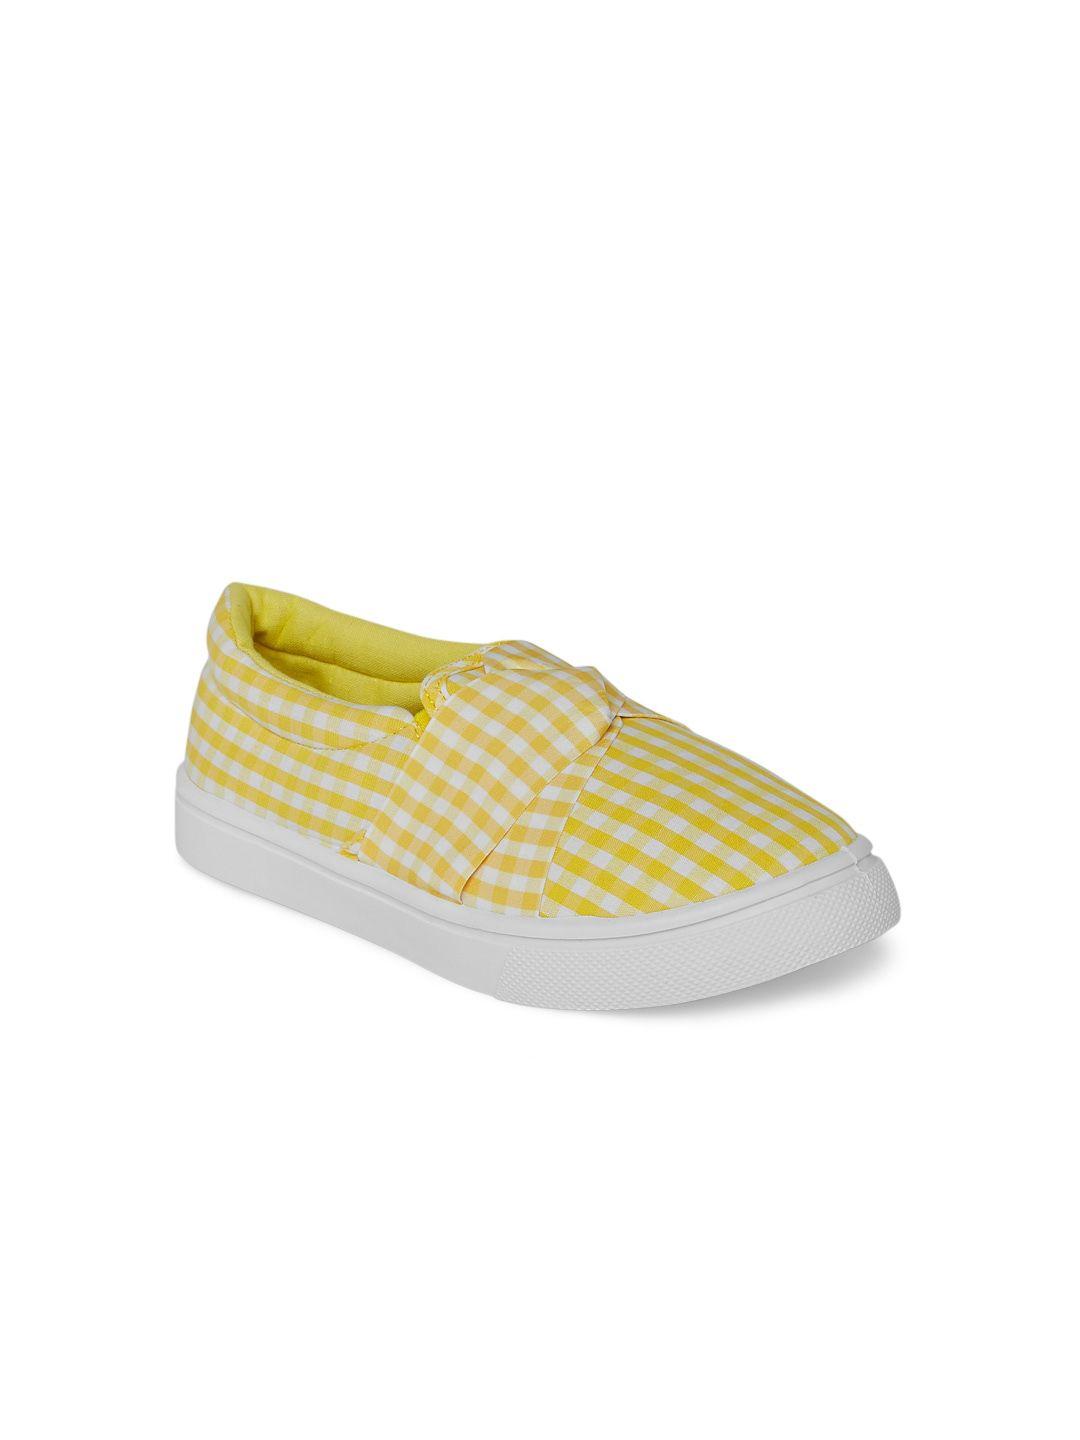 pantaloons junior girls yellow printed slip-on sneakers